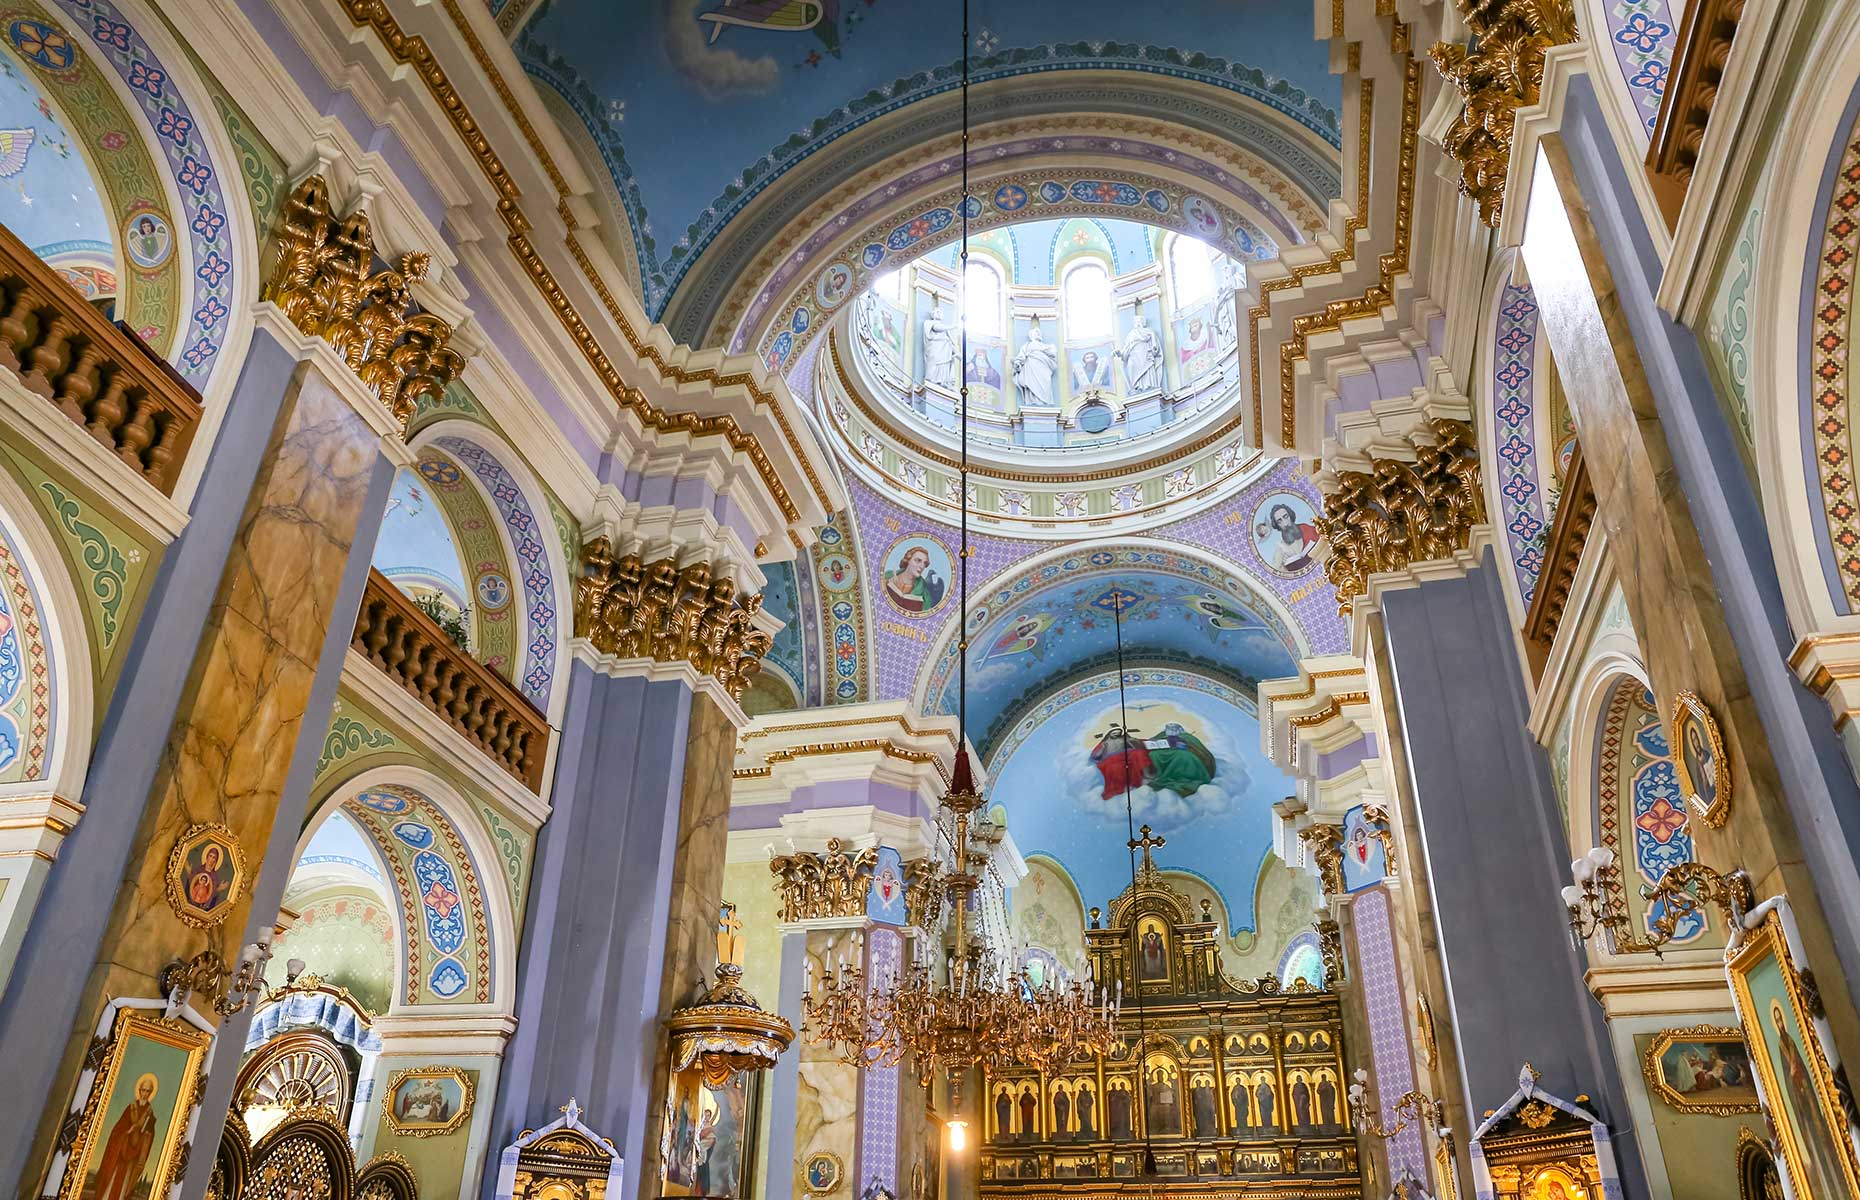 The interior of the Transfiguration Church, Lviv